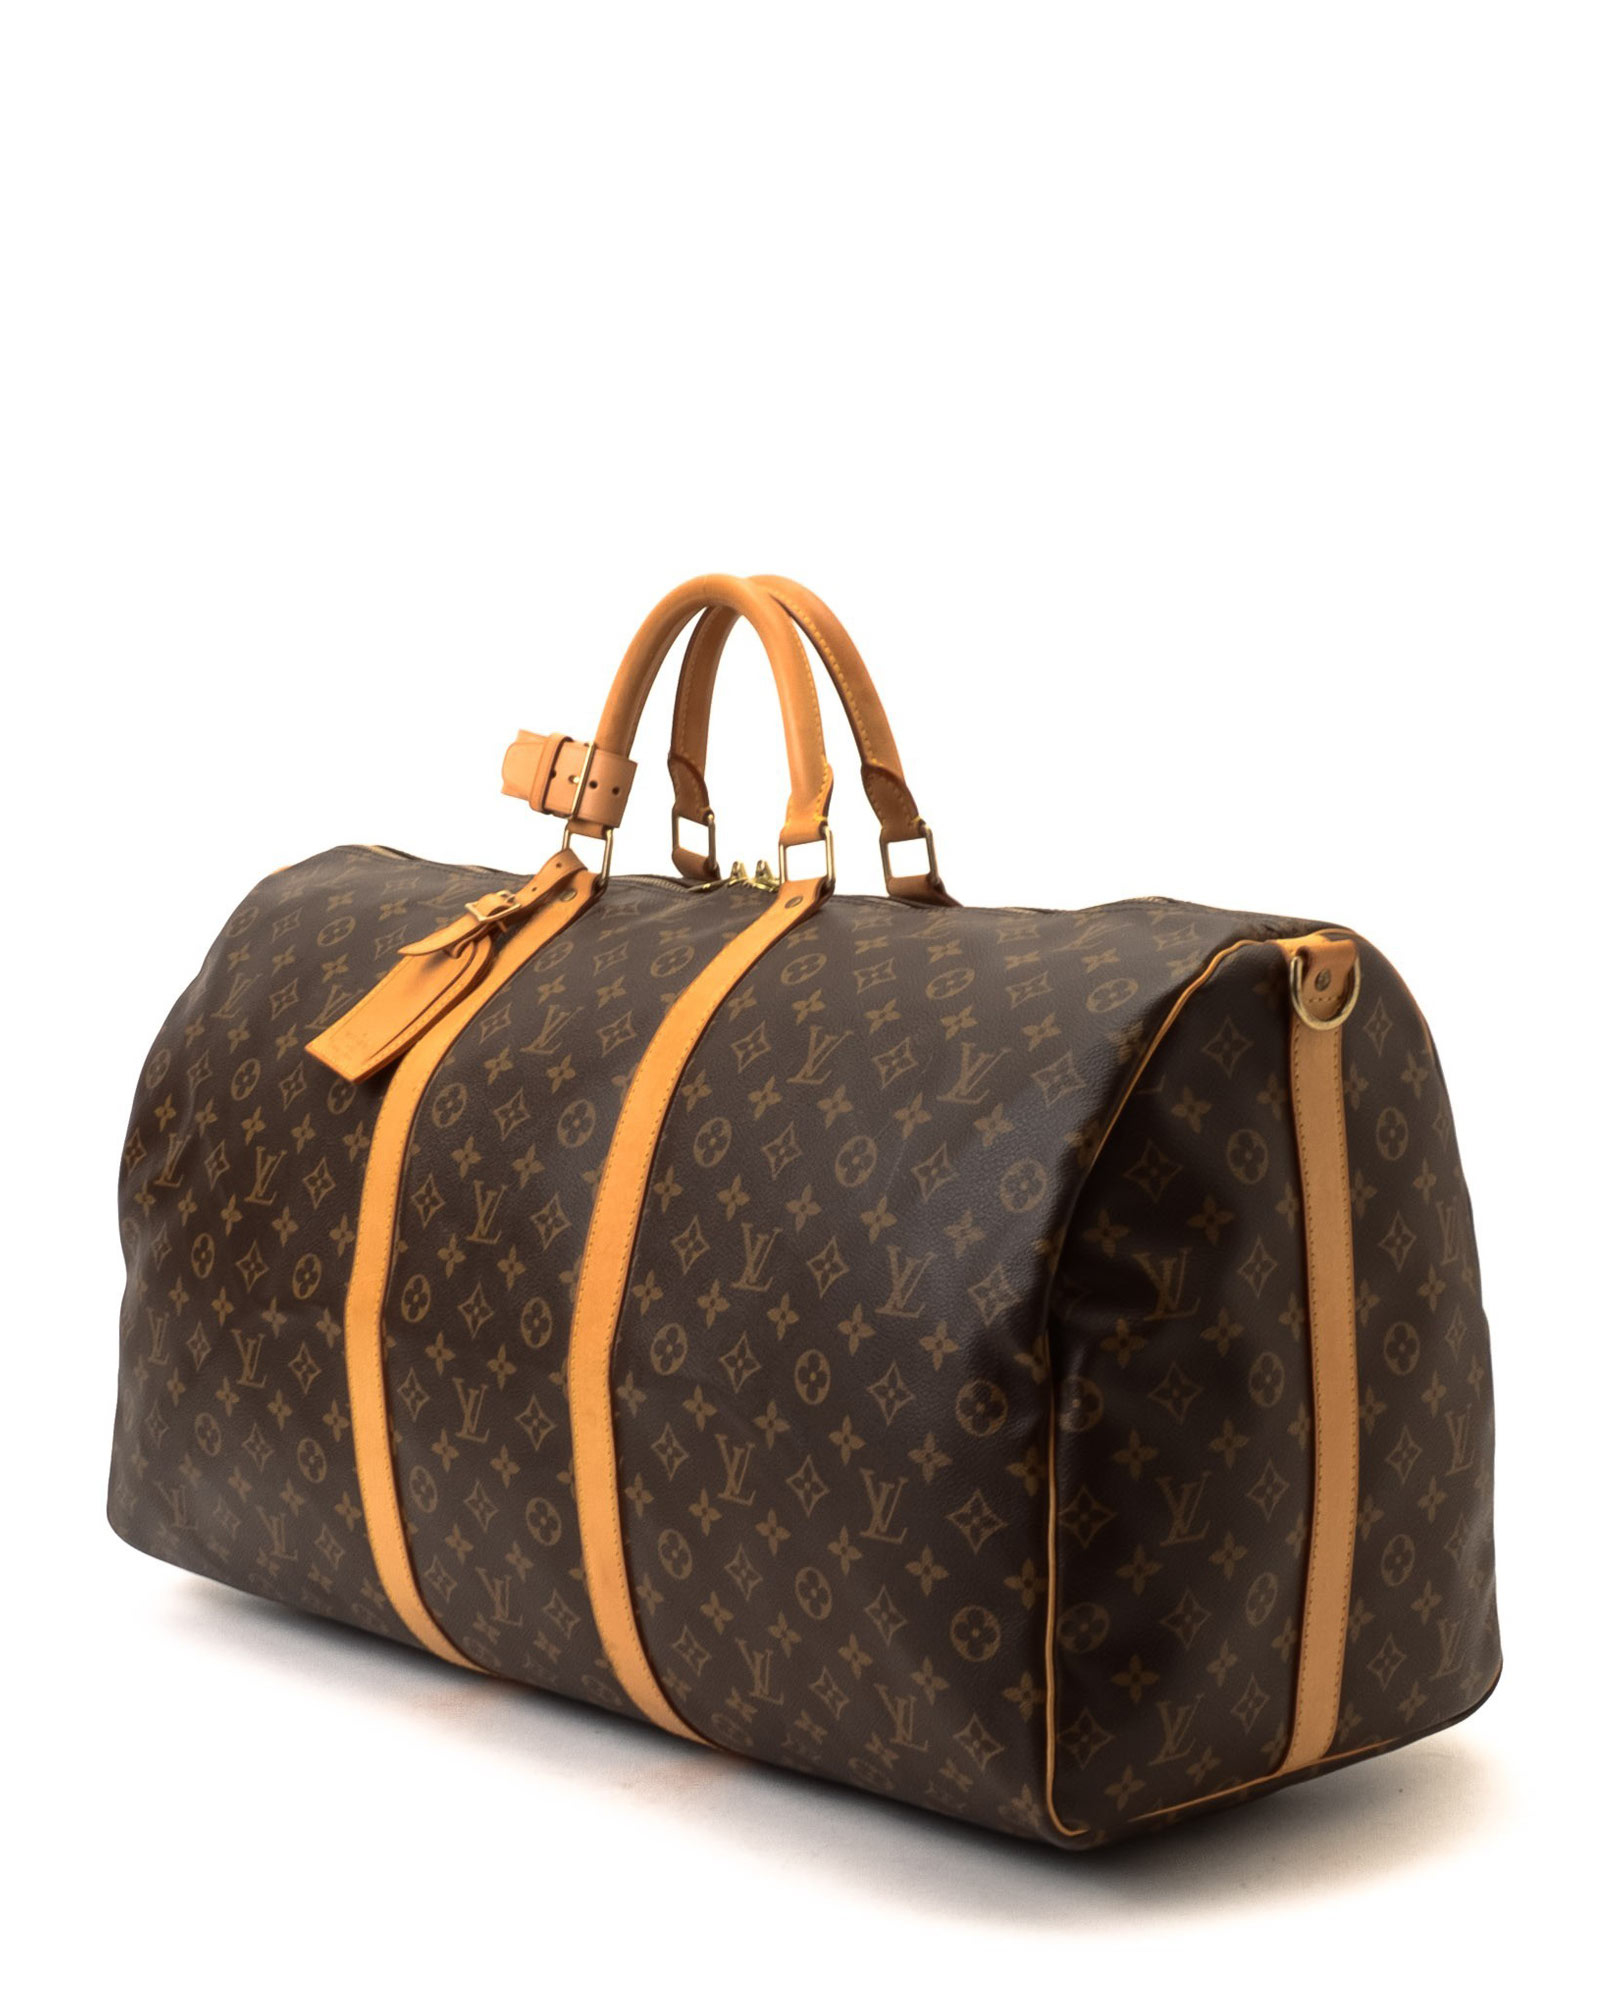 Lyst - Louis Vuitton Travel Bag - Vintage in Brown